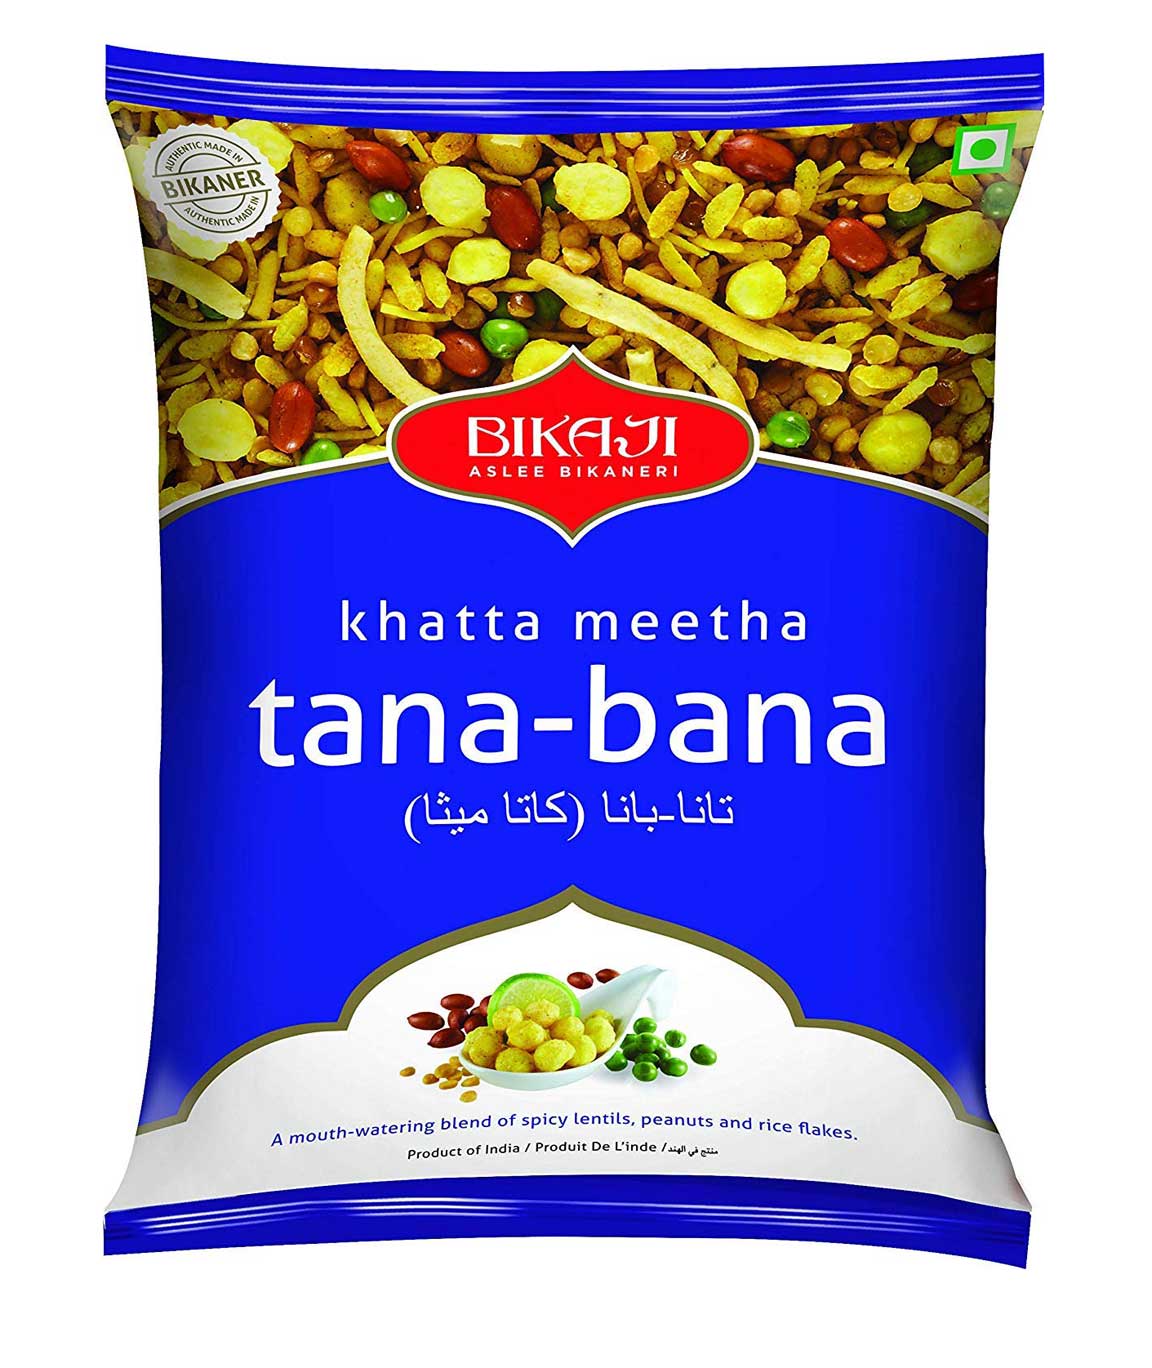 Bikaji Combo Pack -Khattha Meetha Tana-Bana 200gm - Aloo Bhujia Tana-Tan 400gm - Ratlami chatpata sev 400gm - Indian Namkeen Snacks - (Pack of 3)